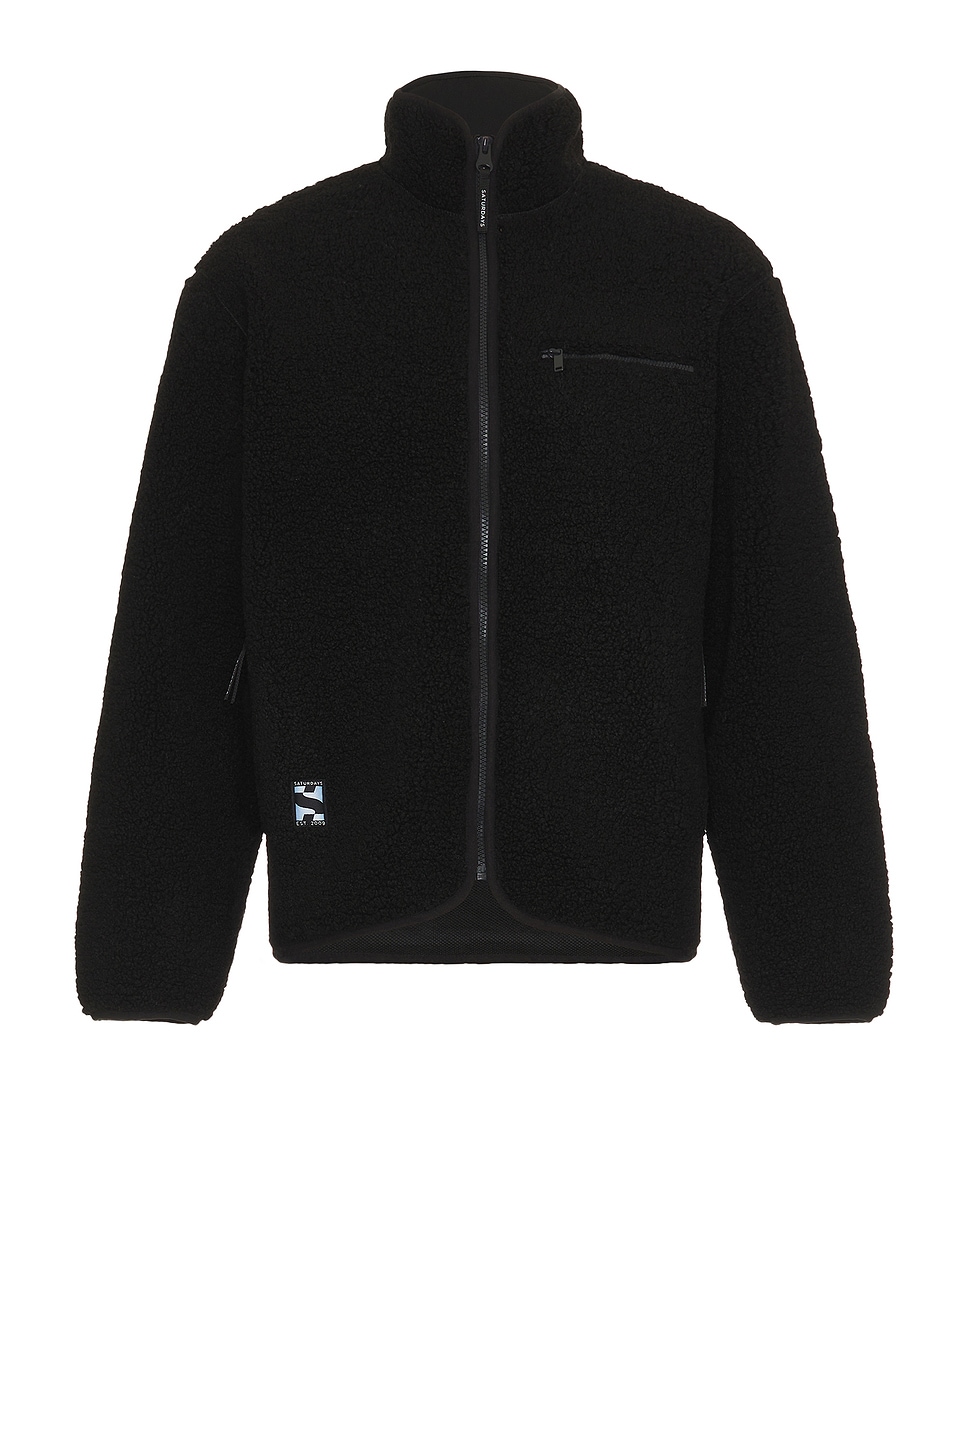 Spencer Polar Fleece Full Zip Jacket in Black